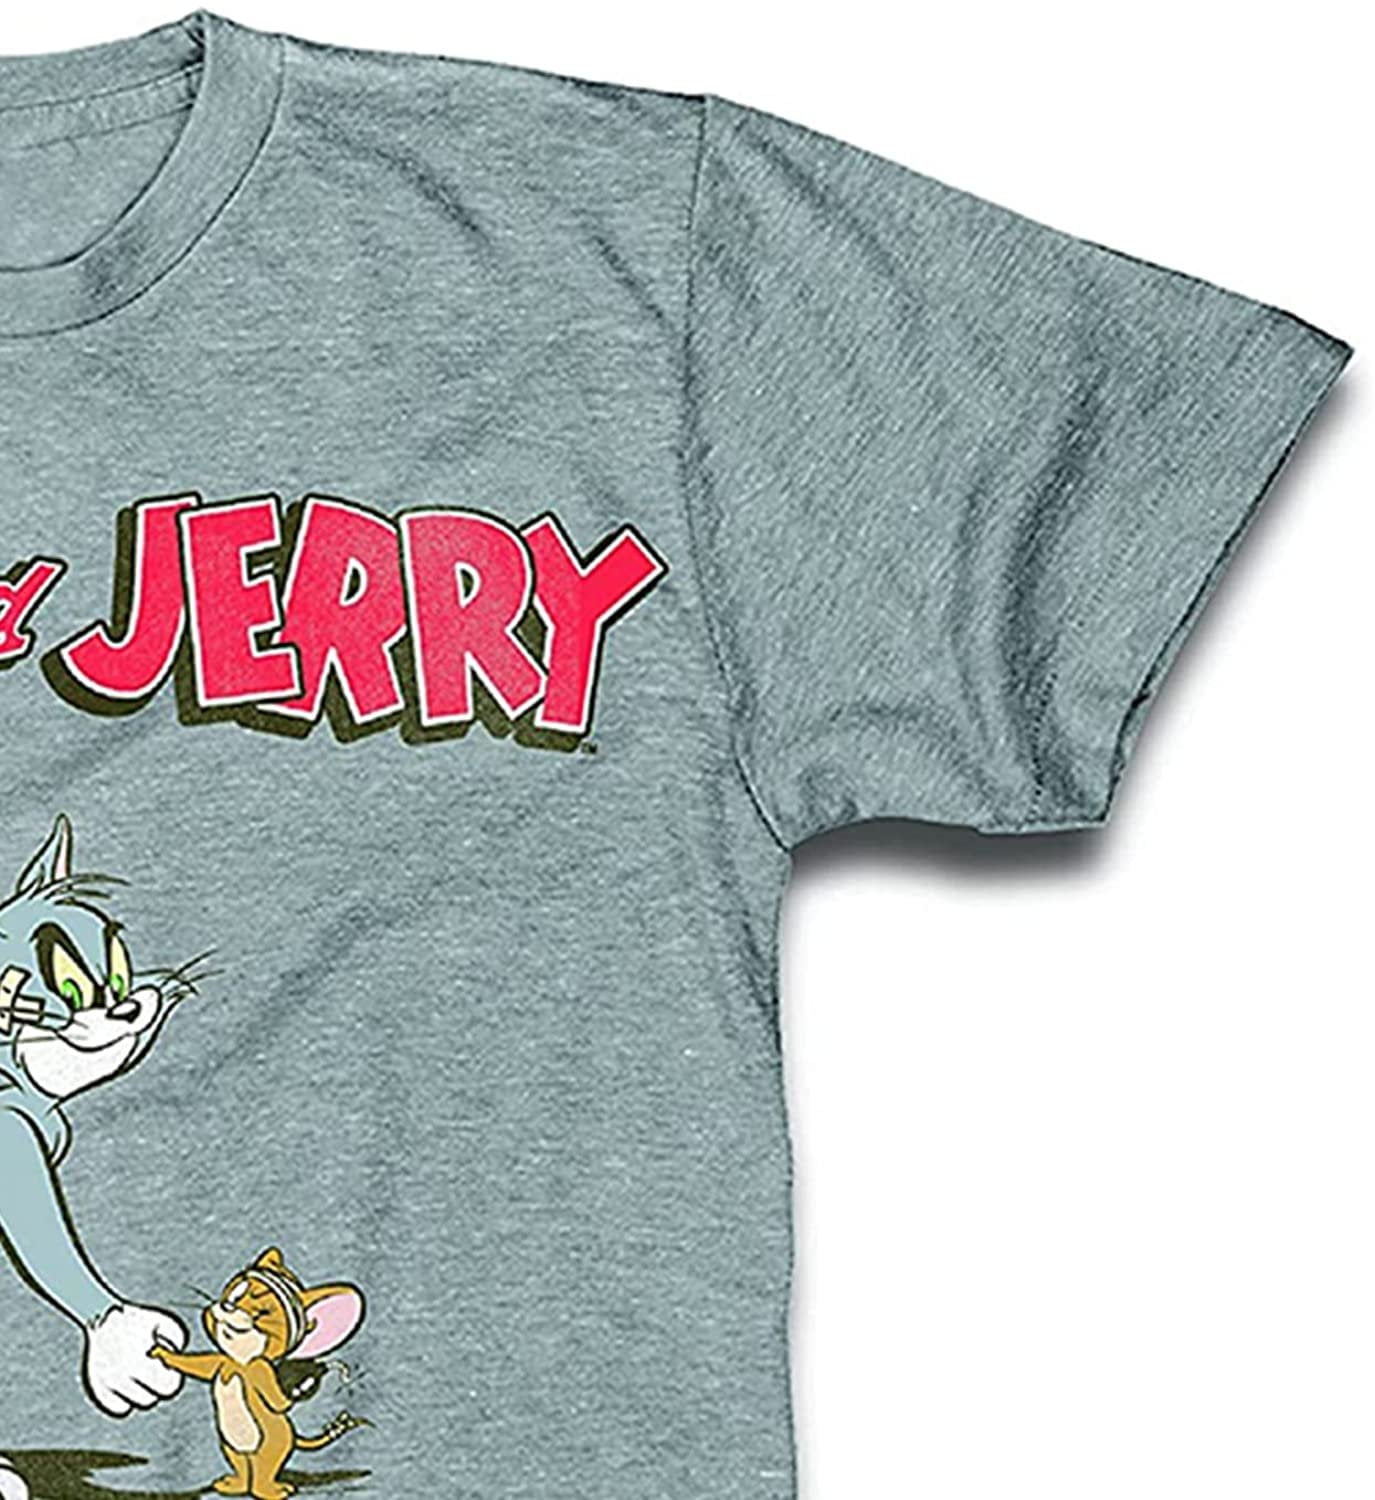 Chase Jerry Tee Hanna-Barbera Cartoon Vintage - & Shirt Battle - Mens Tom Classic T-Shirt